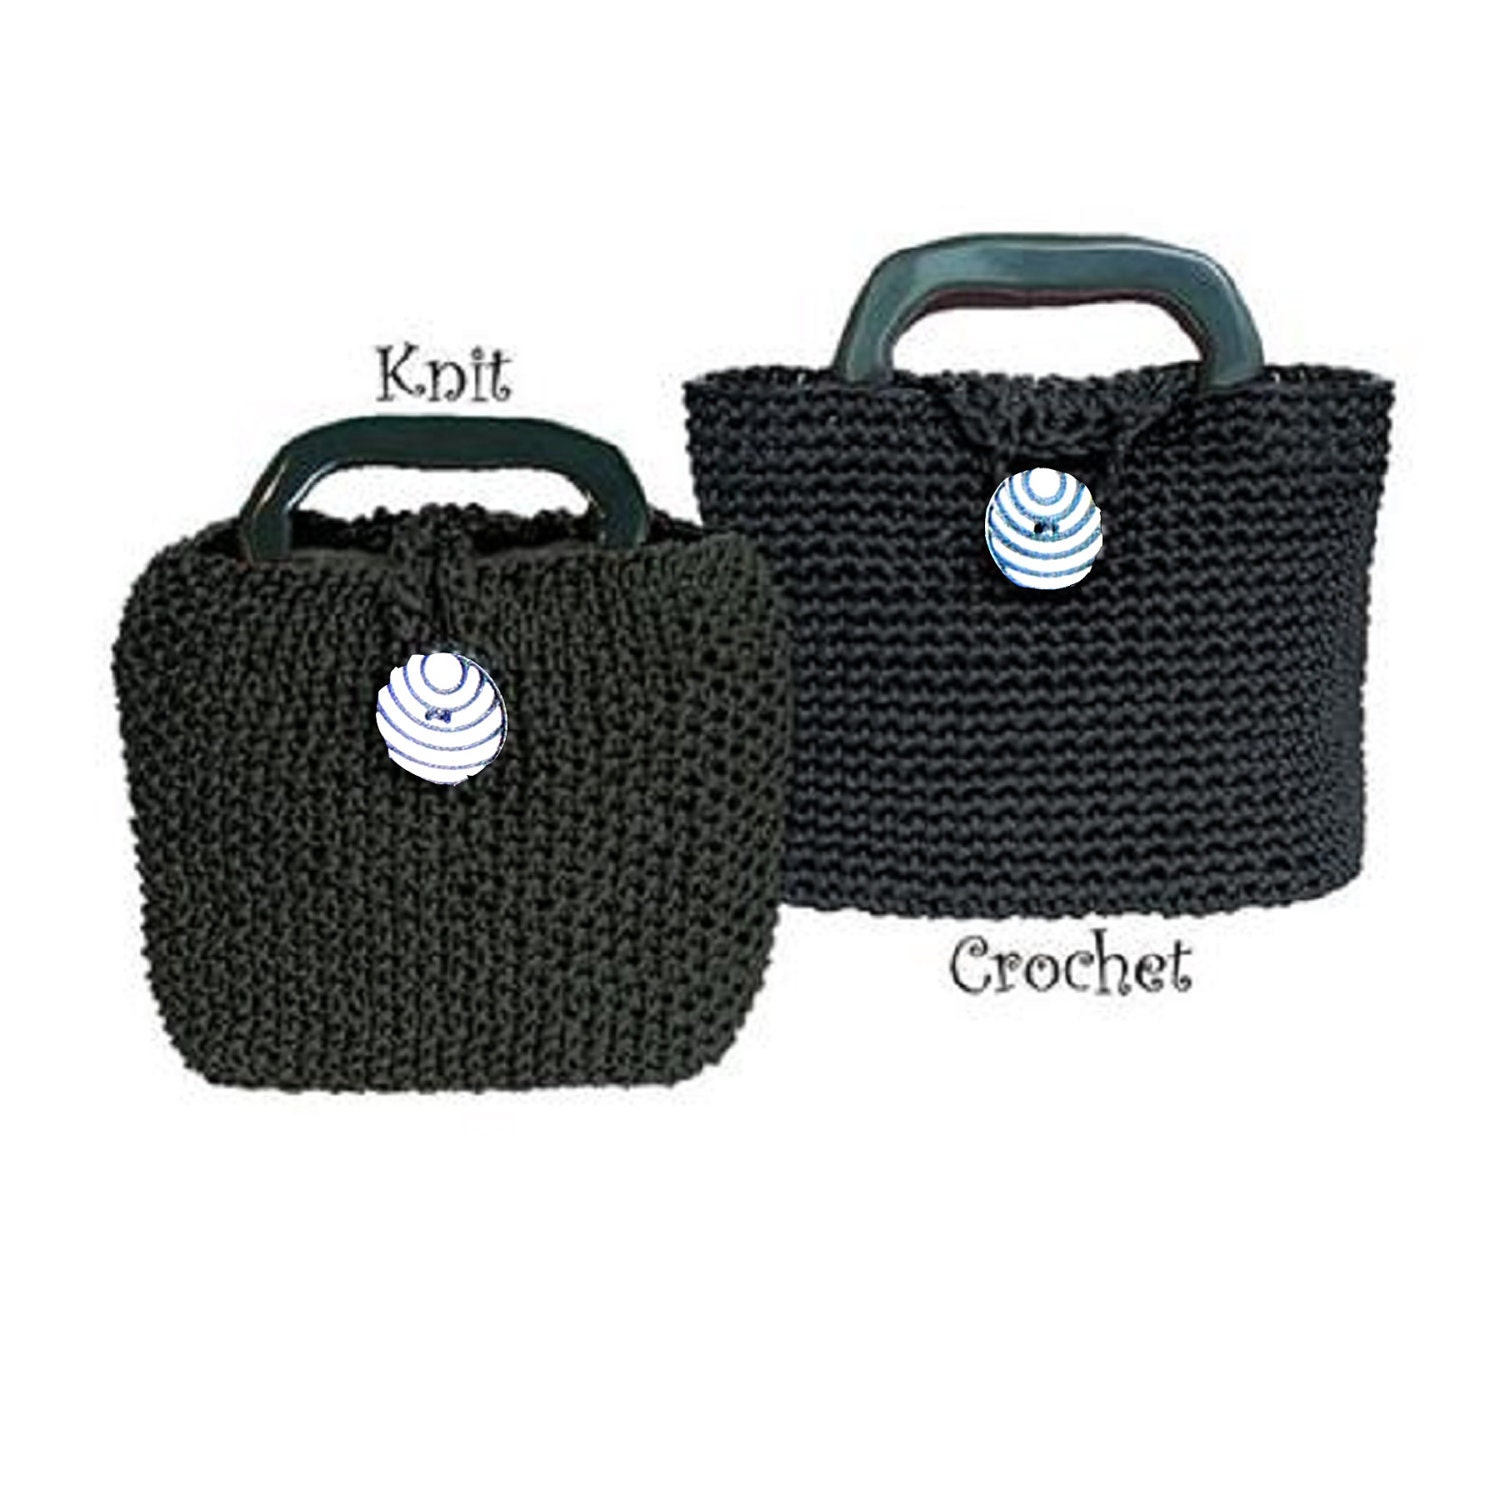 the bagsmith original little black bag purse kit for knit or crochet